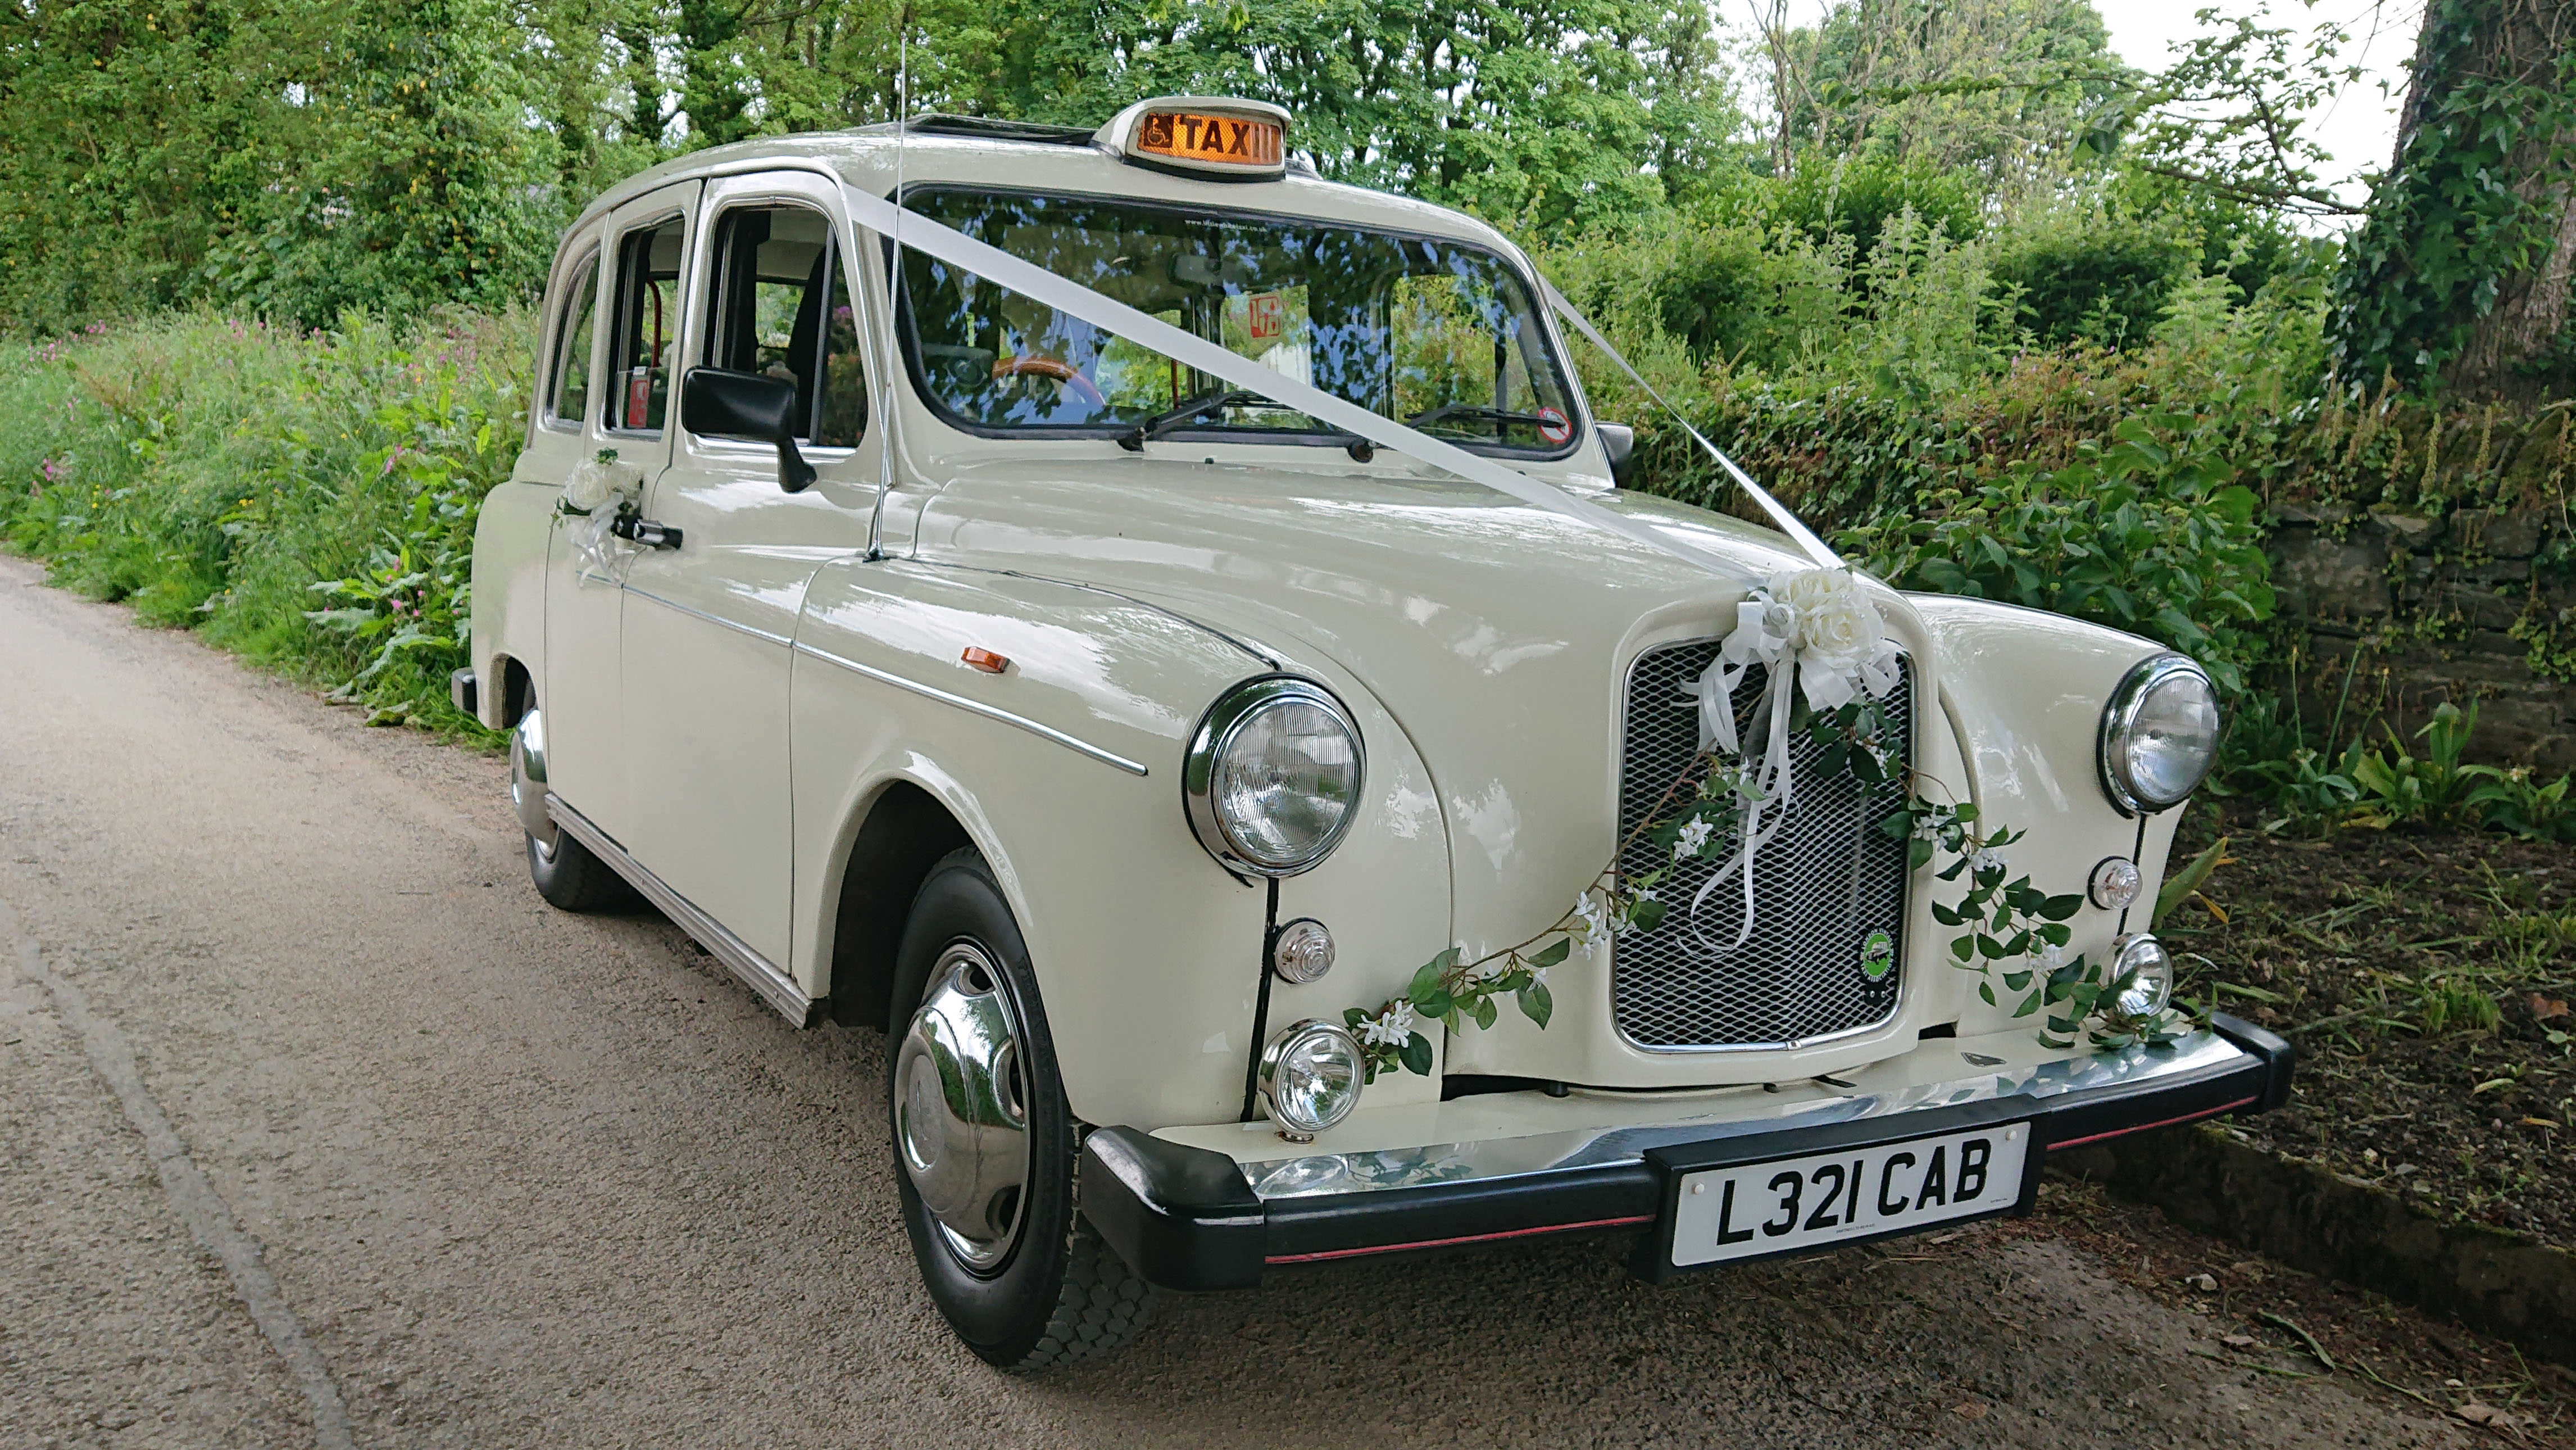 Taxi Cab wedding car for hire in Bude, Devon